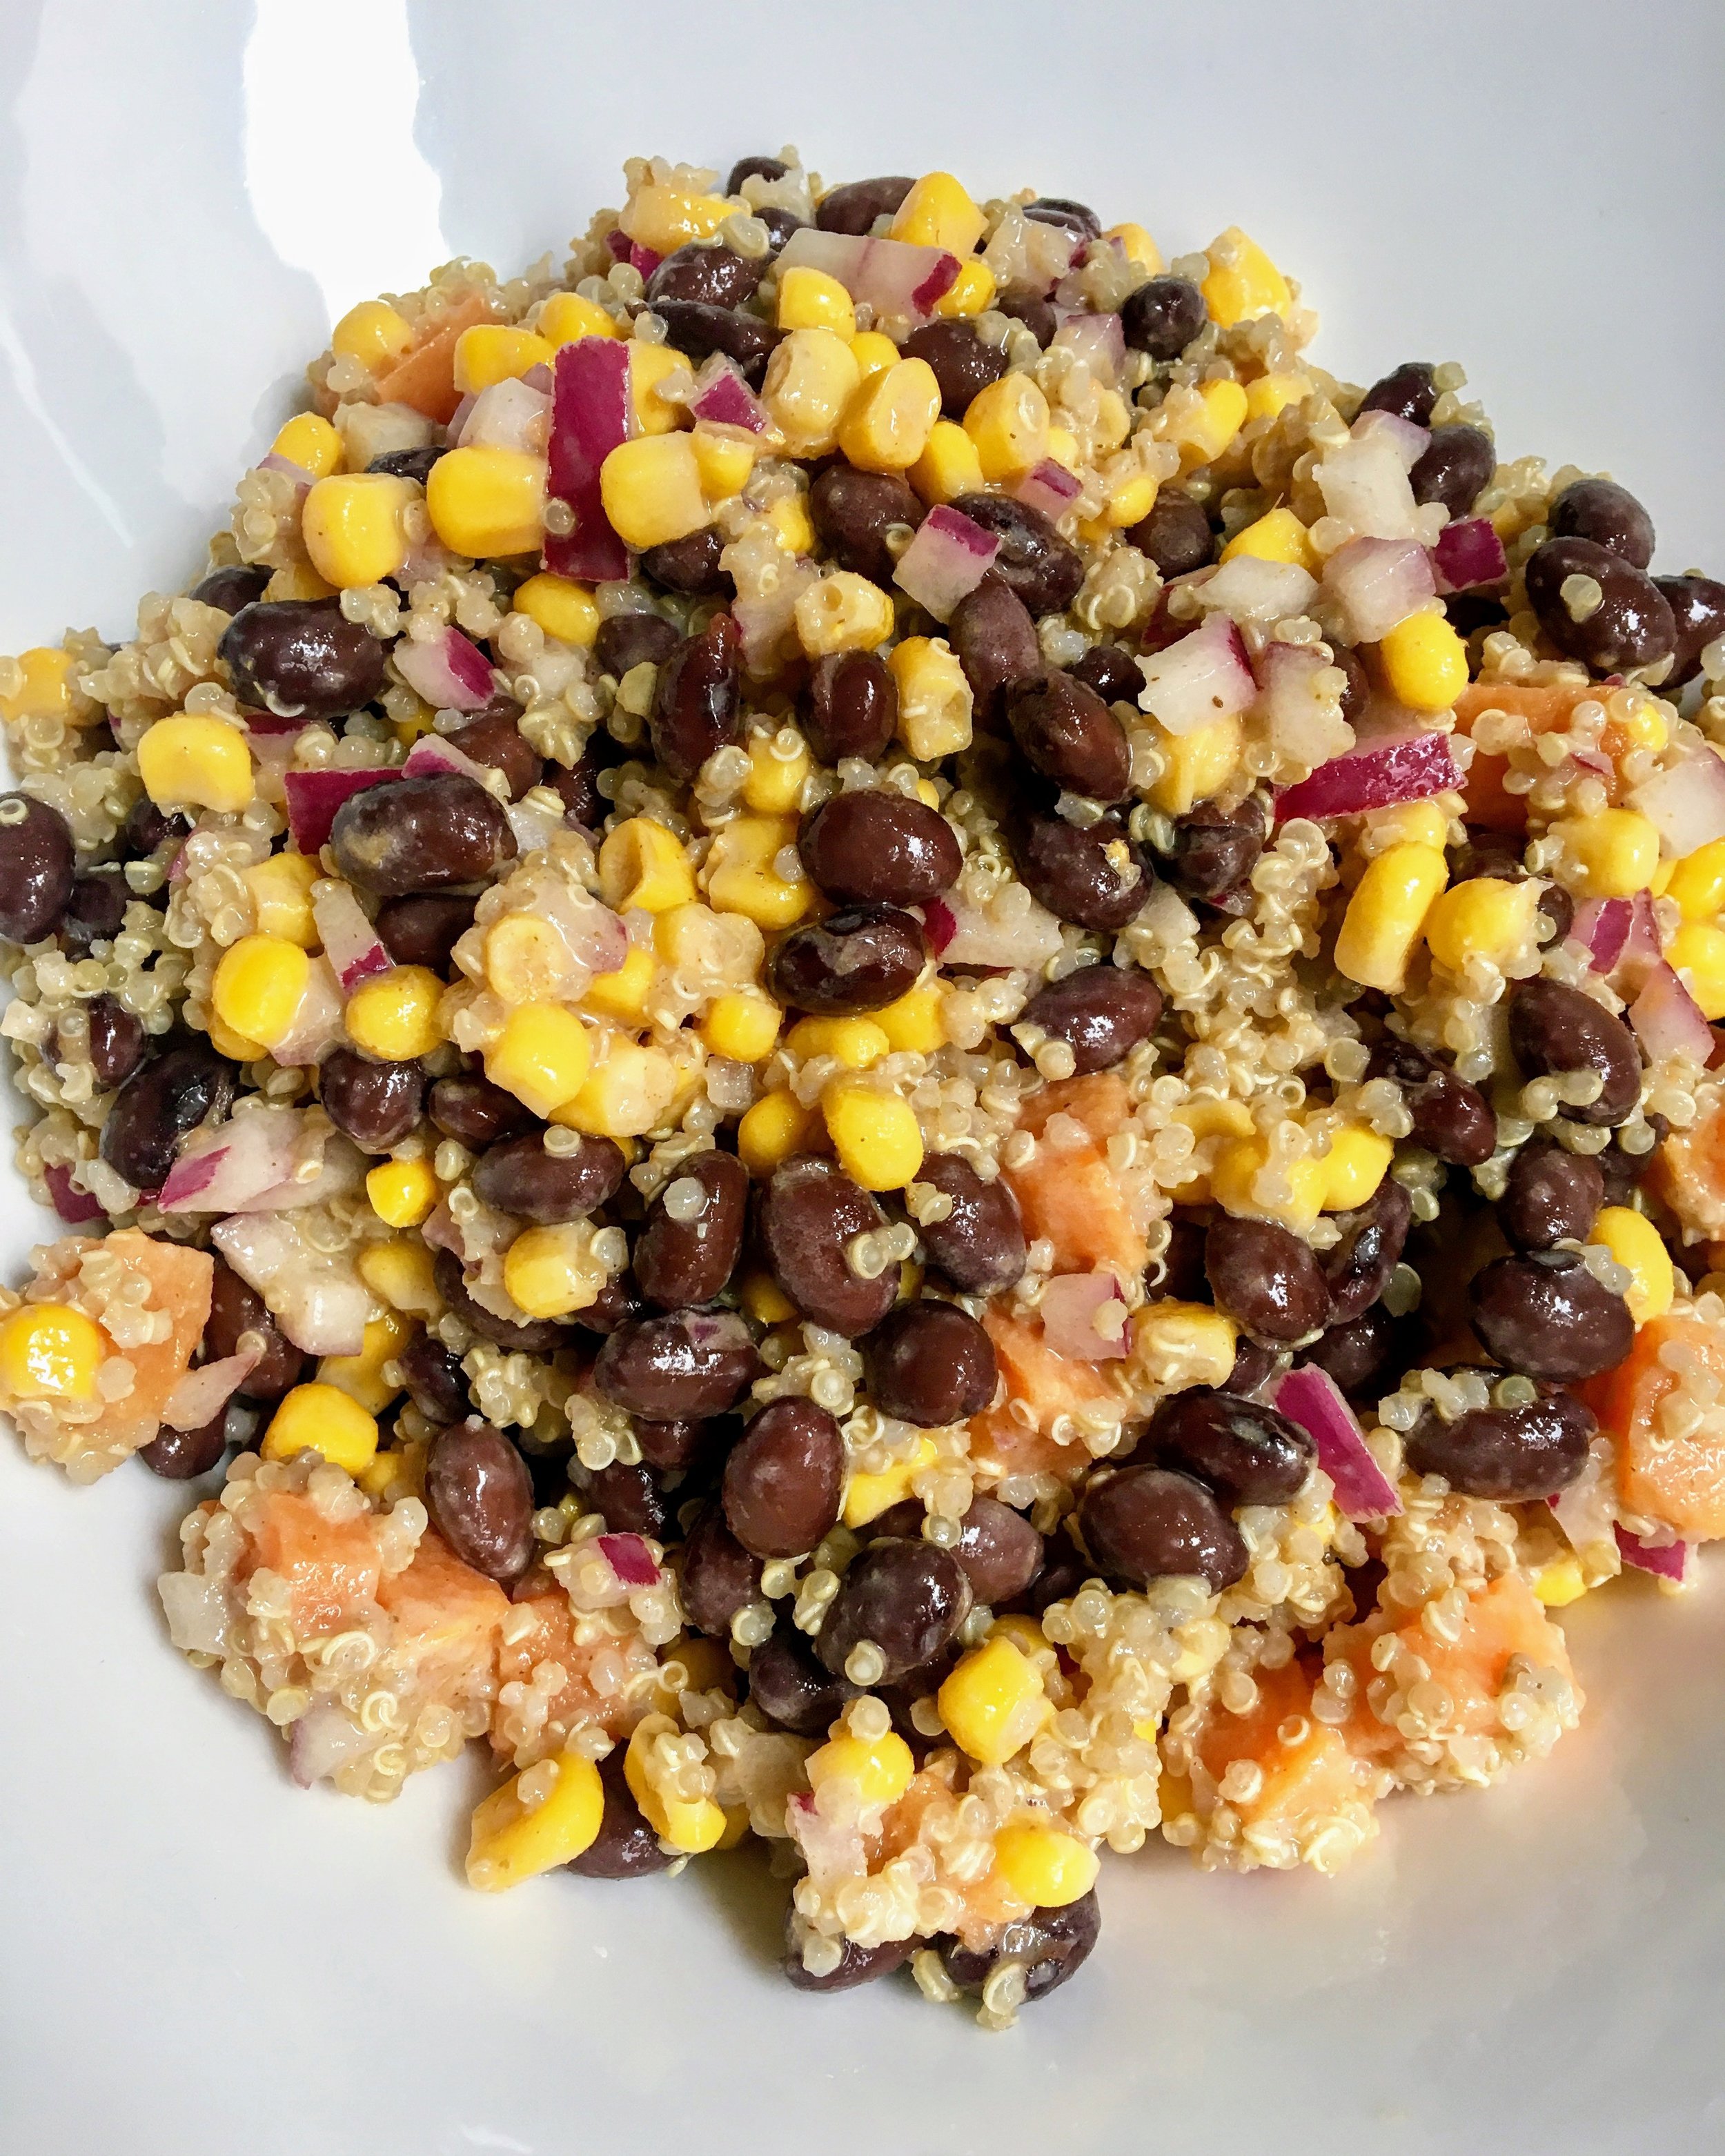 08_corn black bean and grain salad.JPG